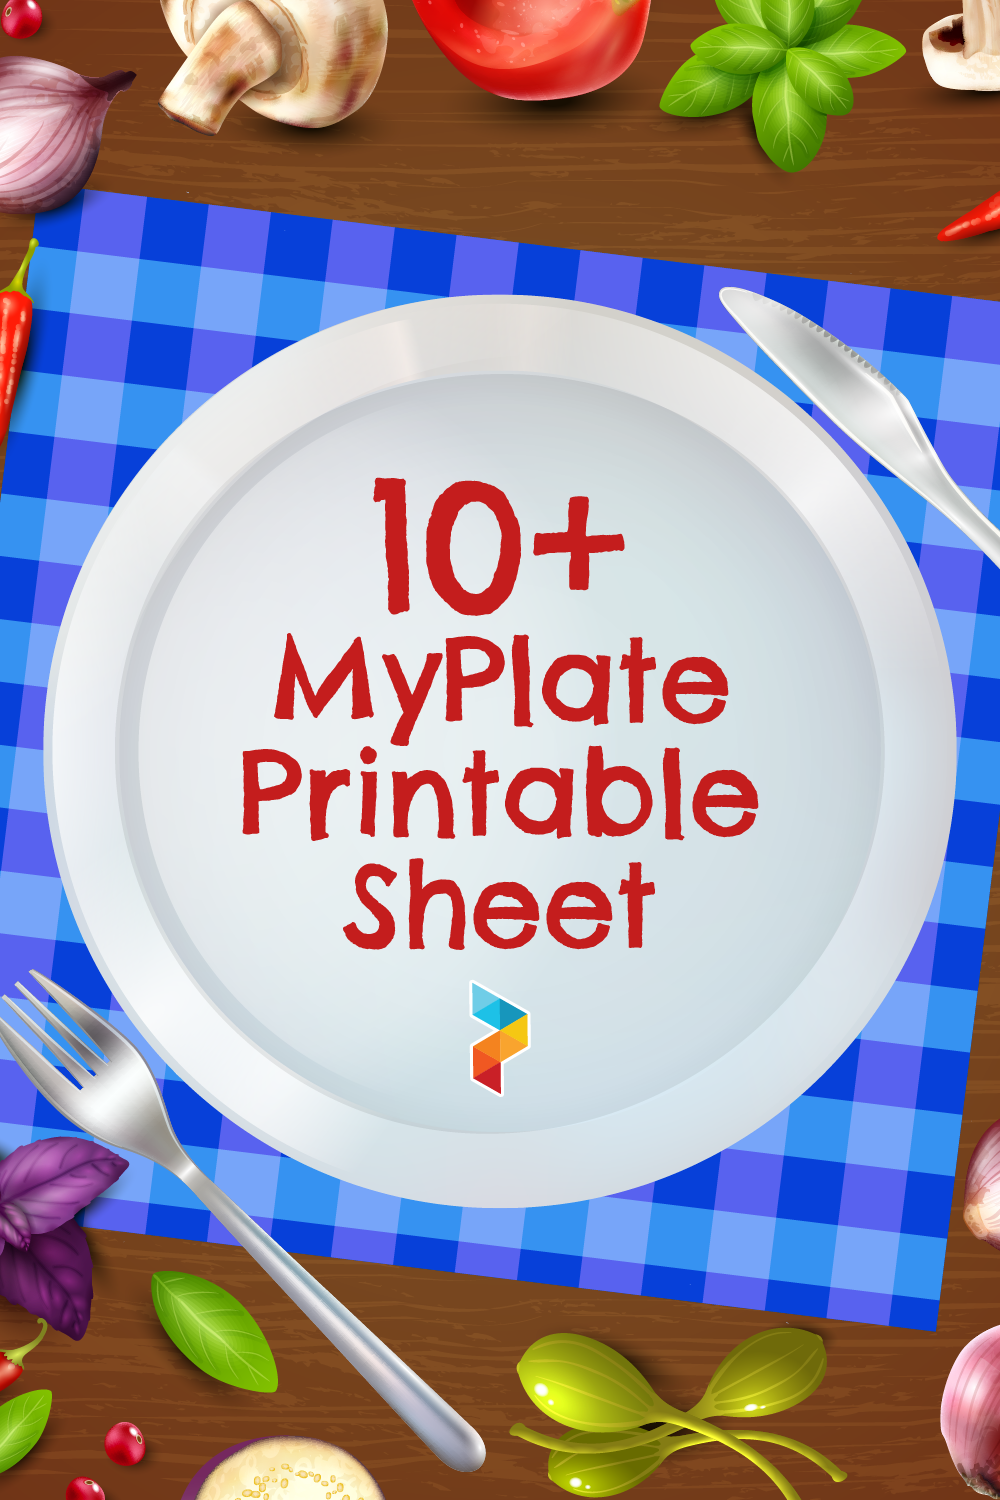 MyPlate Printable Sheet